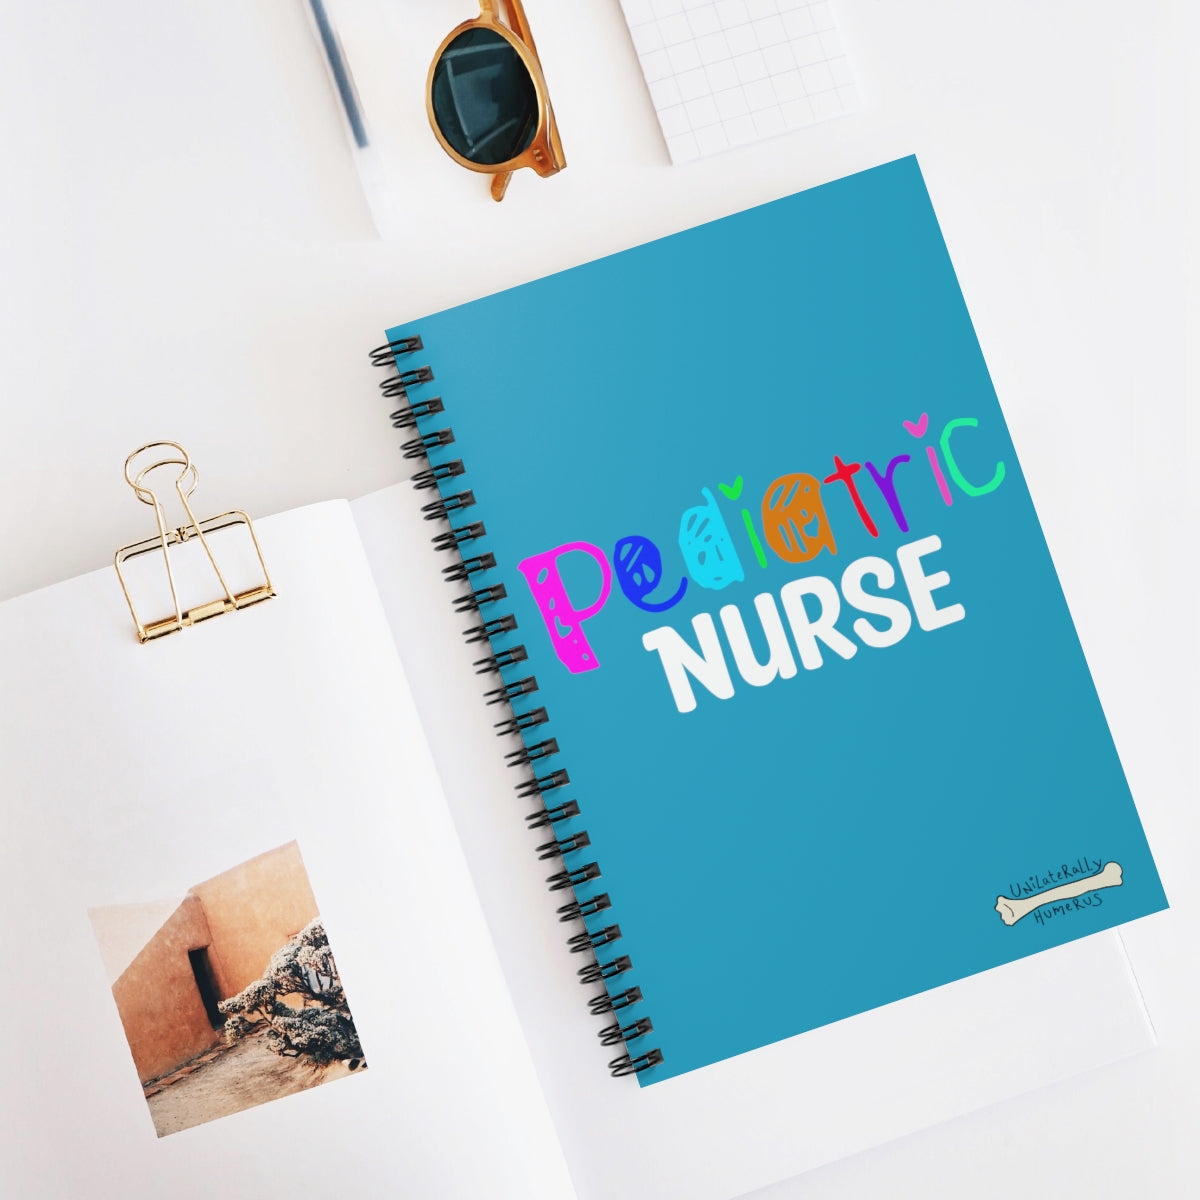 Pediatric Nurse Spiral Notebook - Ruled Line